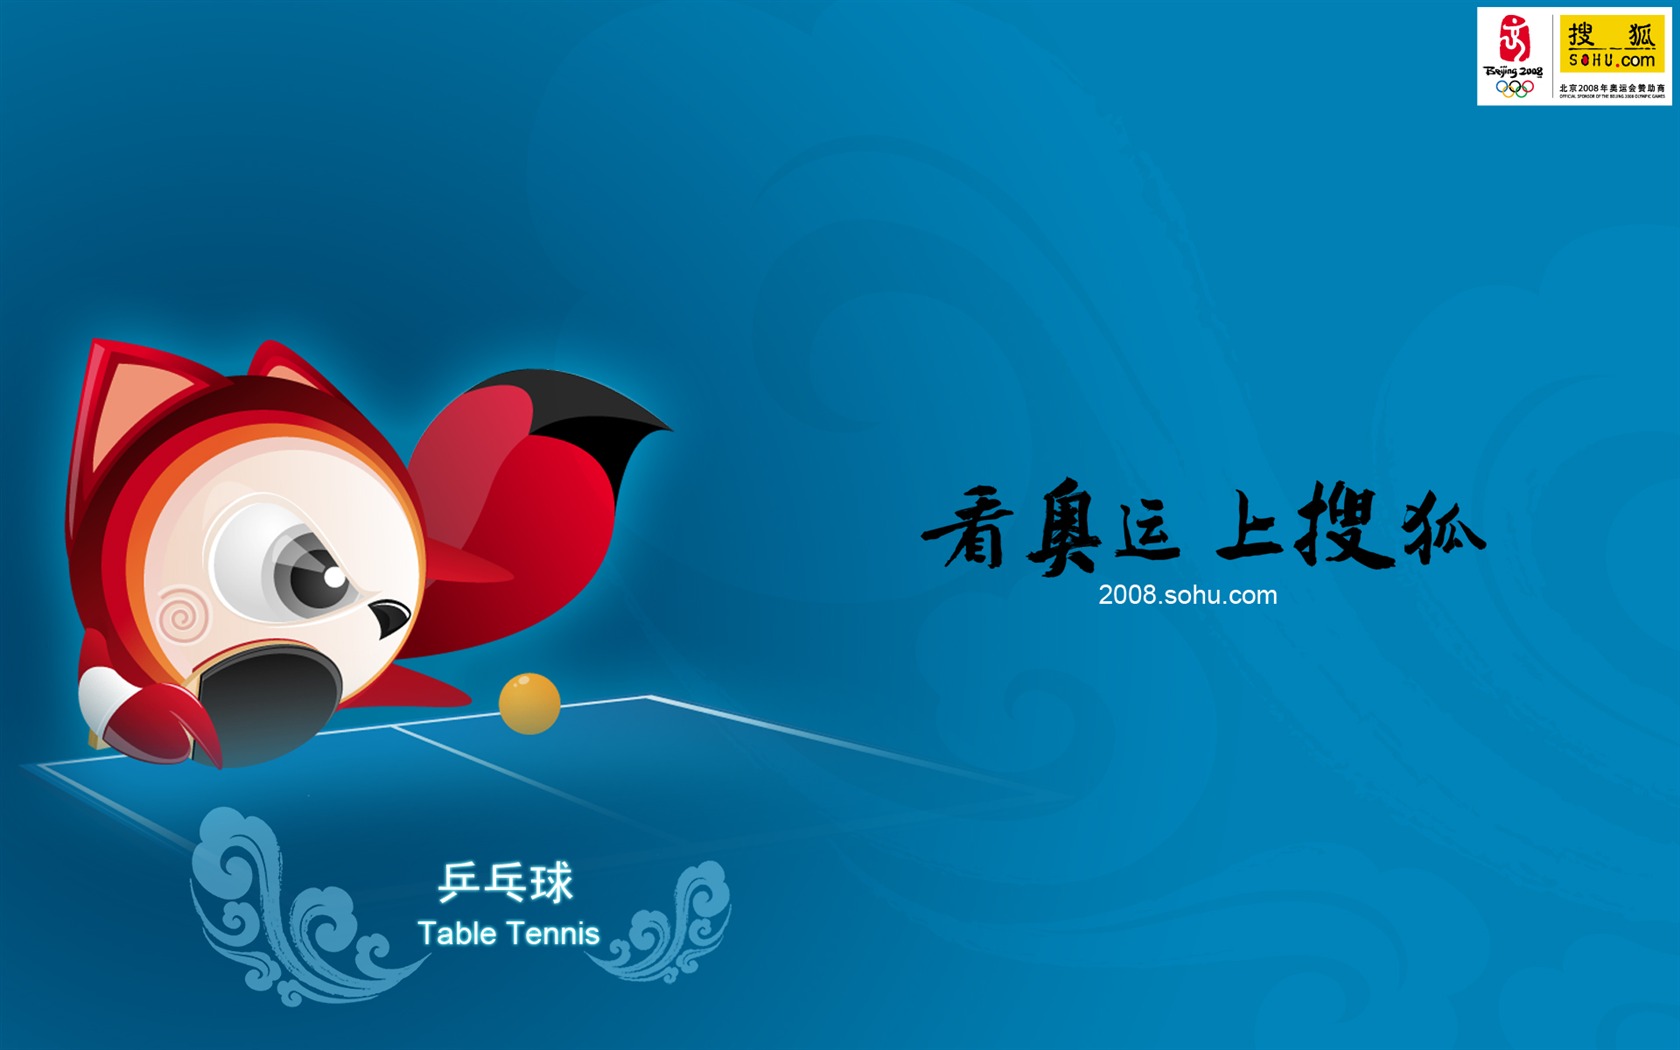 Sohu Olympic sports style wallpaper #27 - 1680x1050